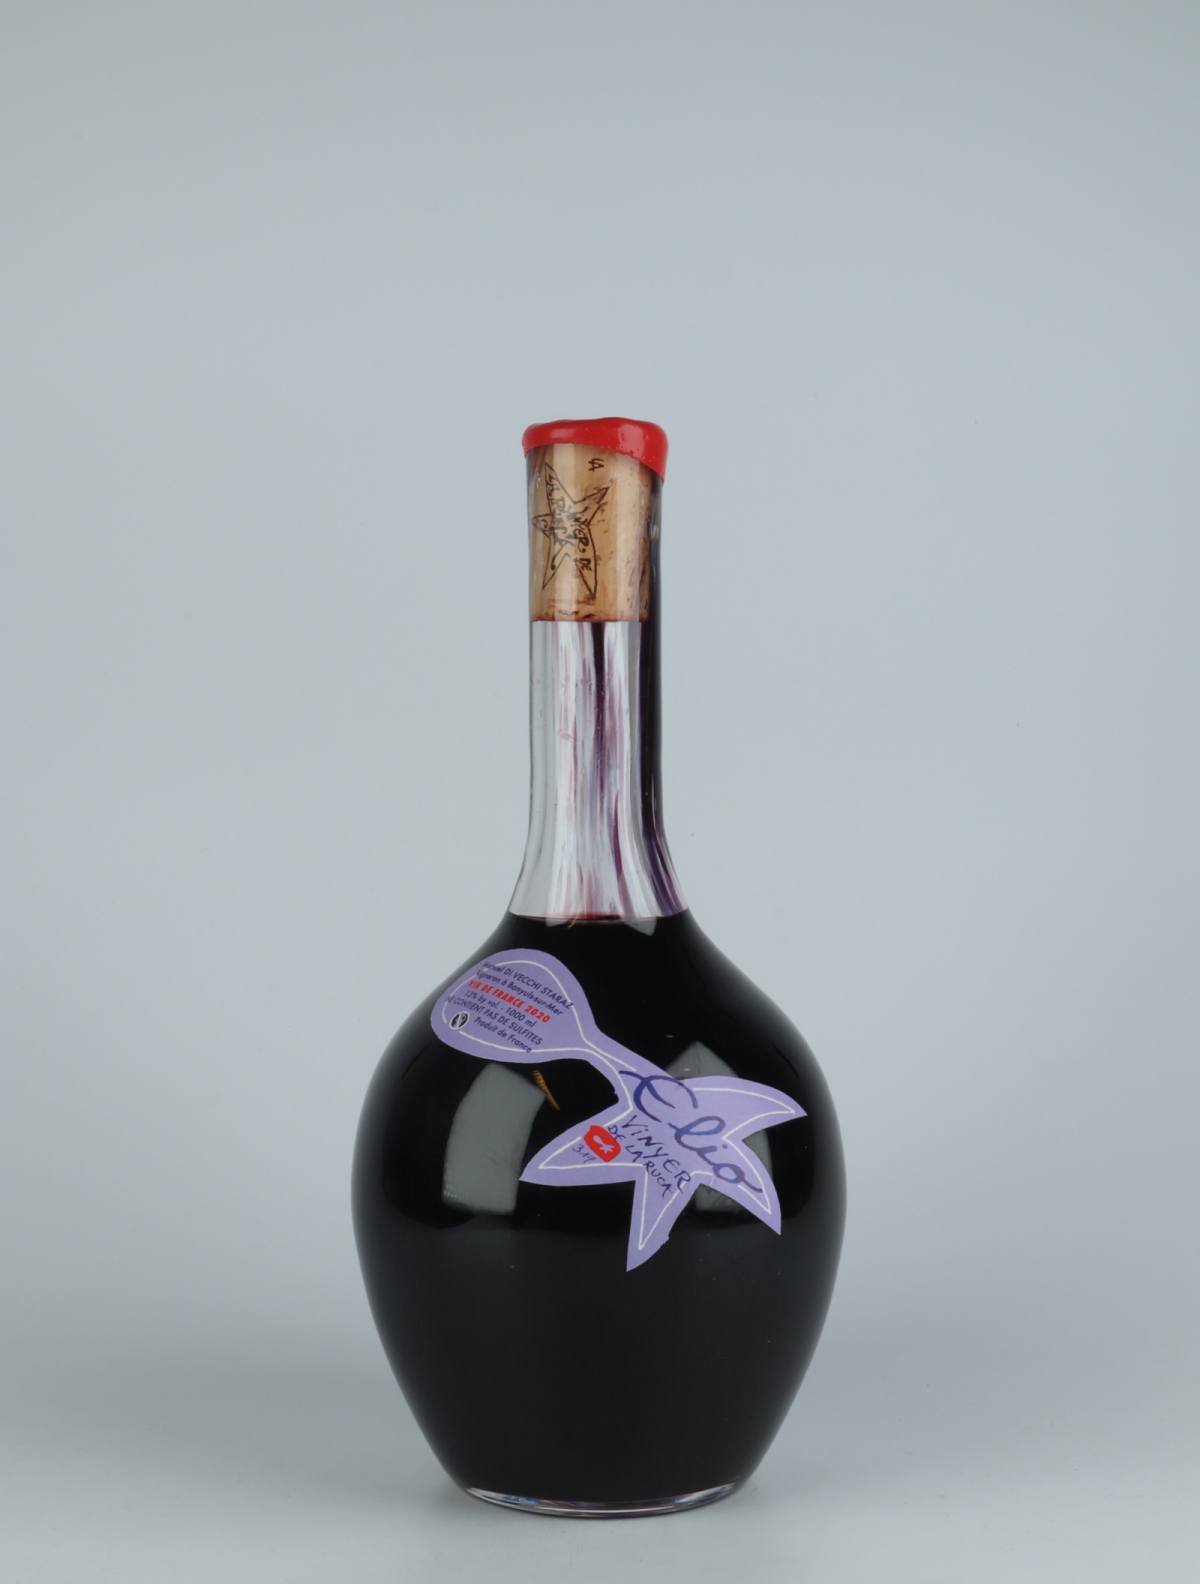 A bottle 2020 Elio Red wine from Vinyer de la Ruca, Rousillon in France